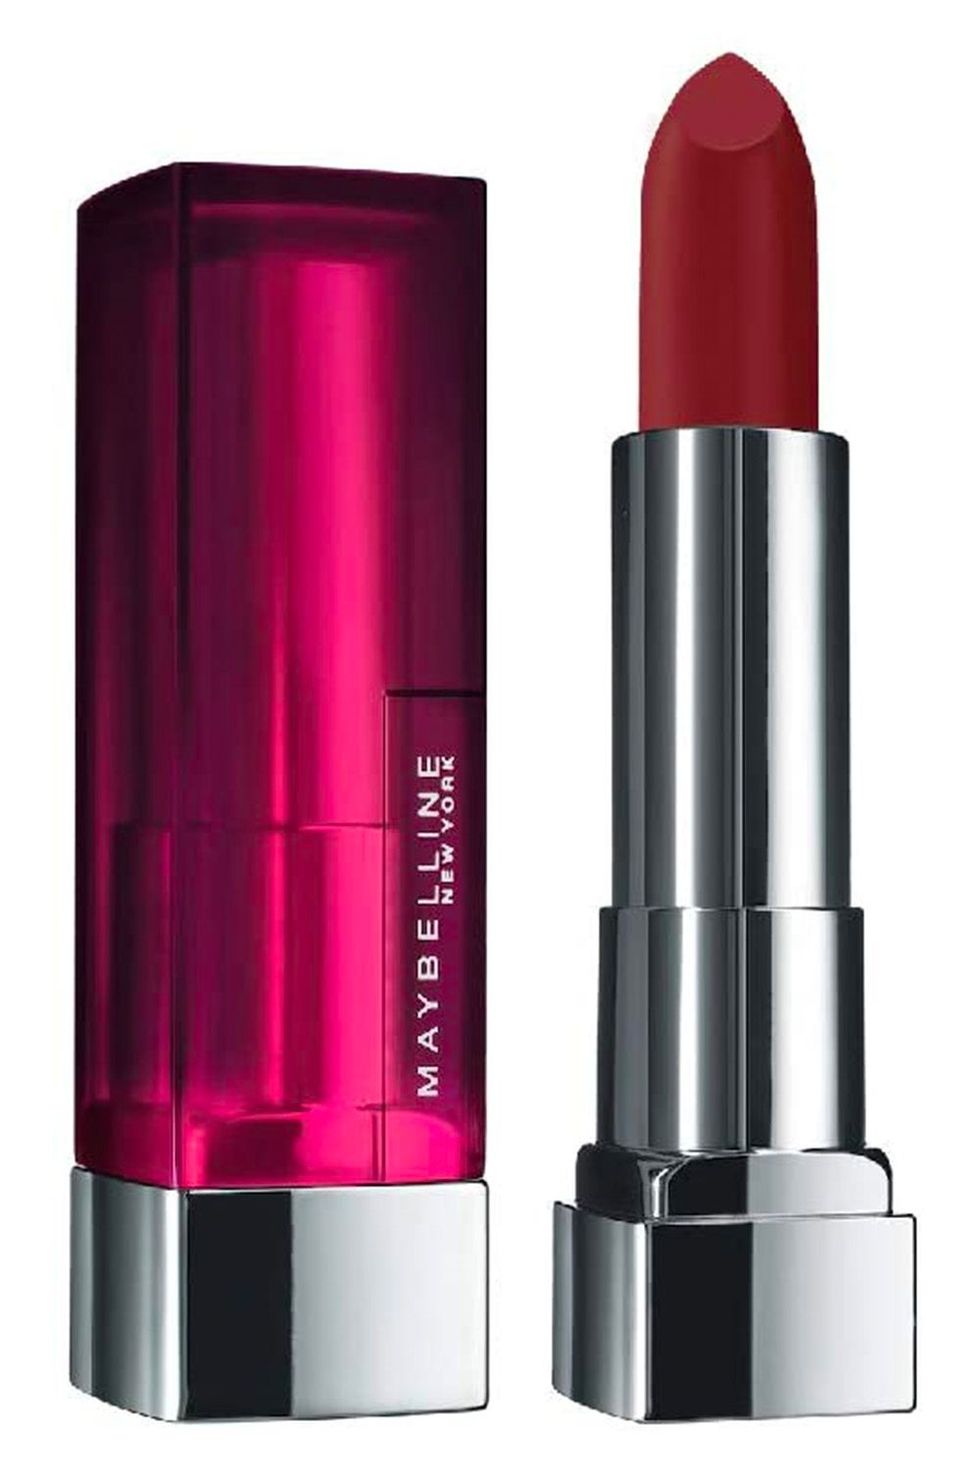 Maybelline New York Color Sensational Matte Lipstick in Burgundy Blush